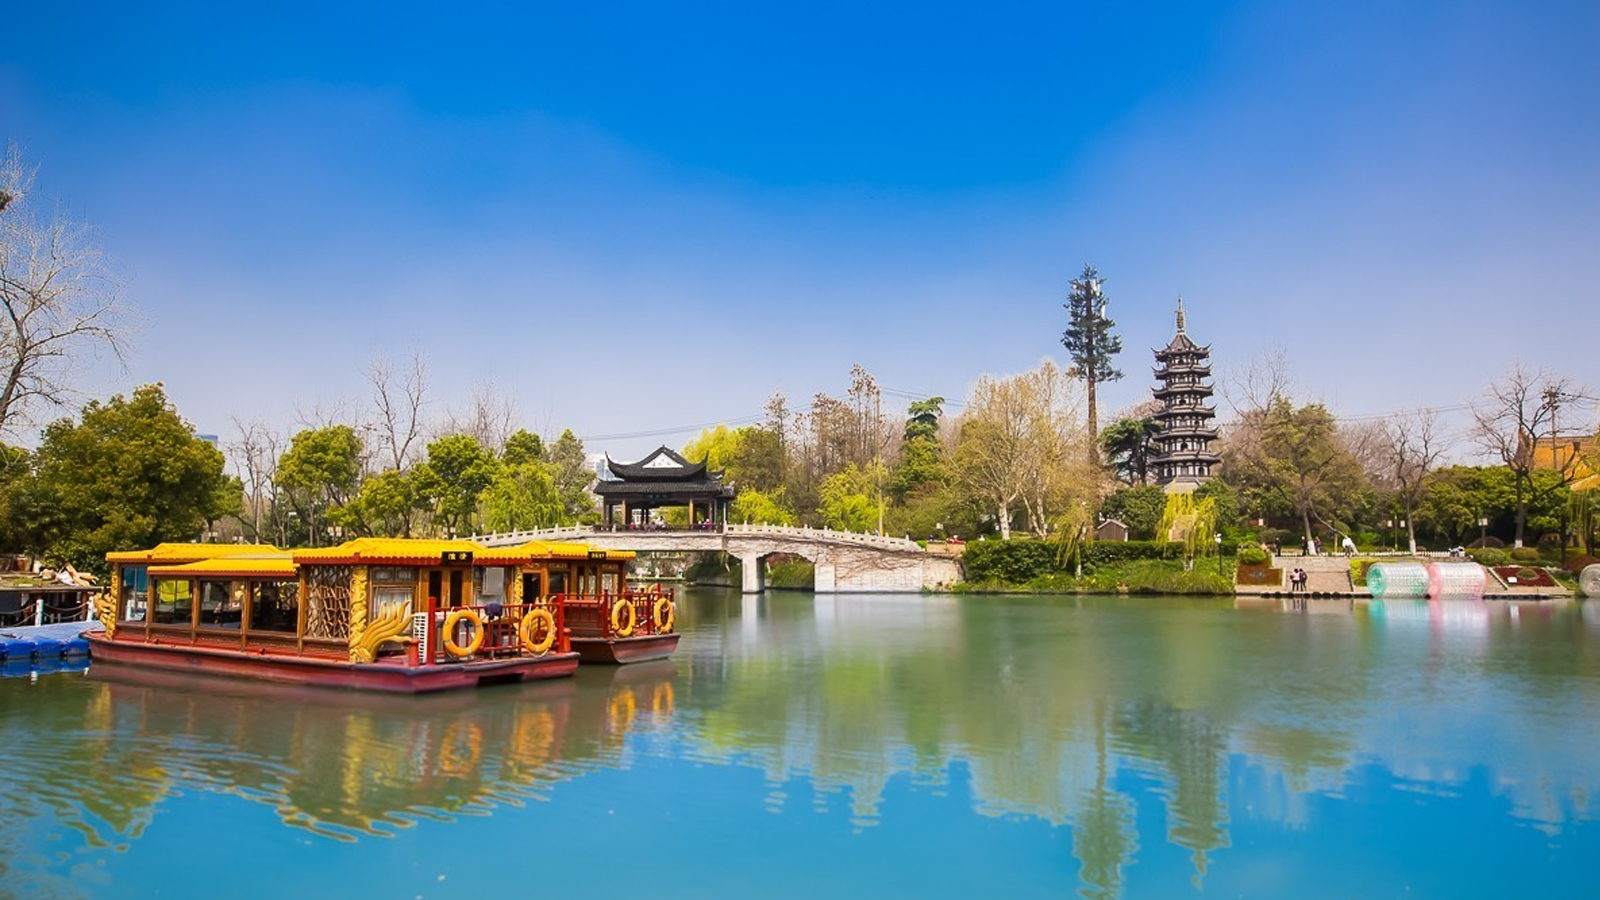 5a级景区,南京城中园林,风景美如画的白鹭洲公园